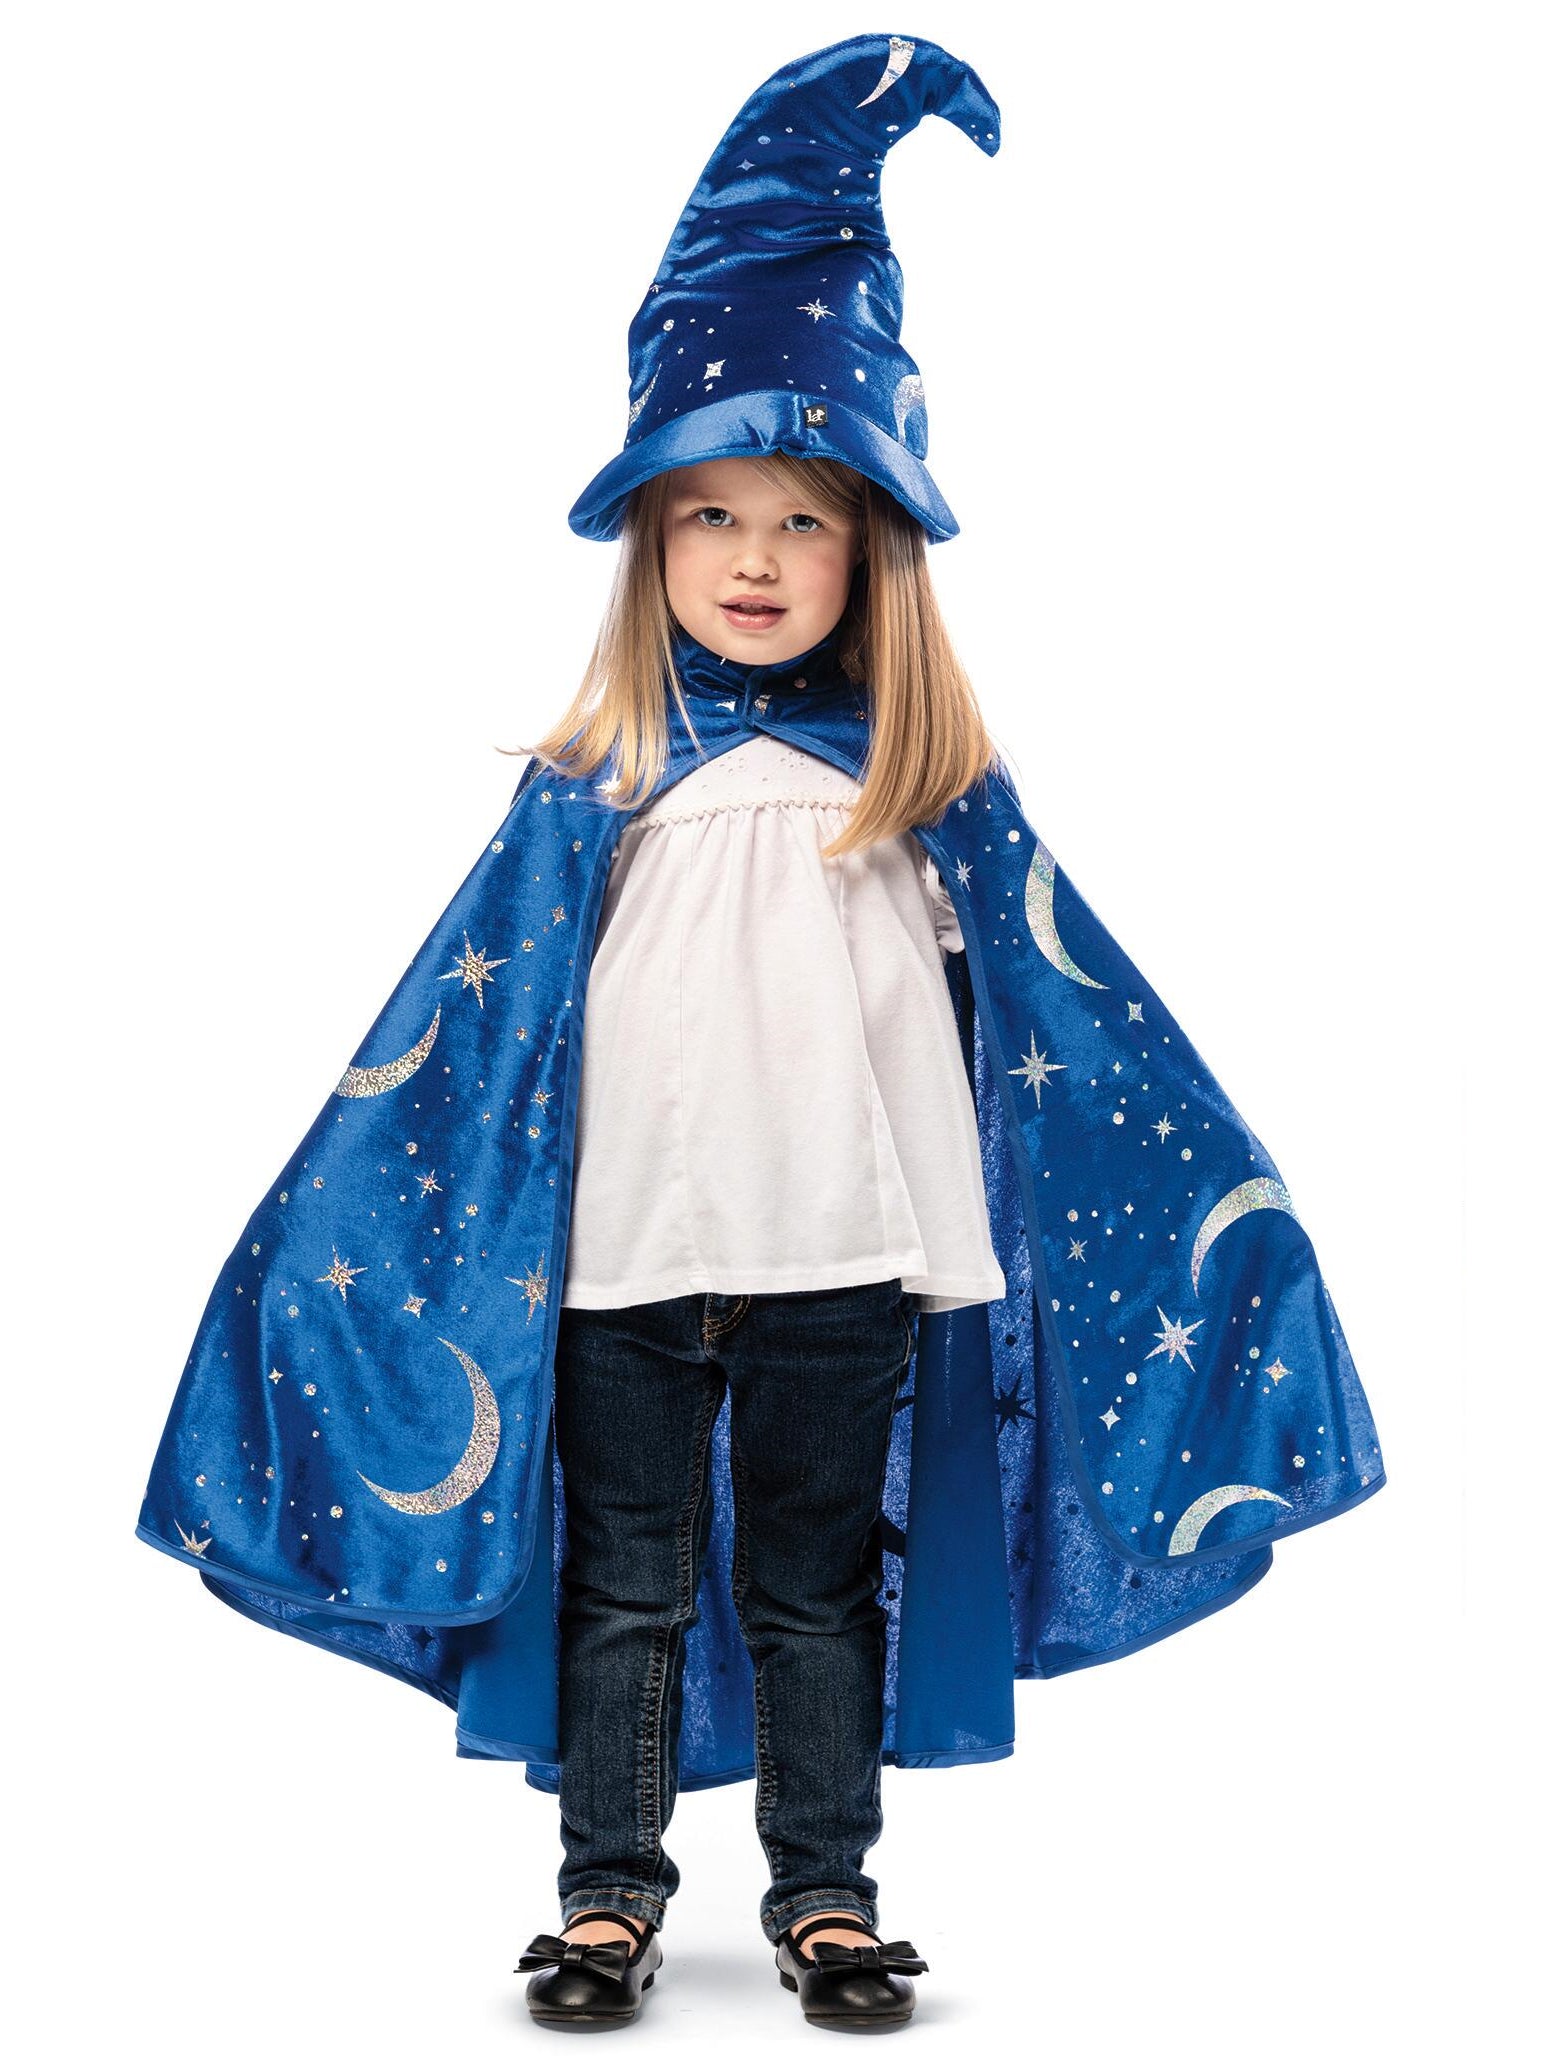 Kids Wizard Costume - Chasing Fireflies